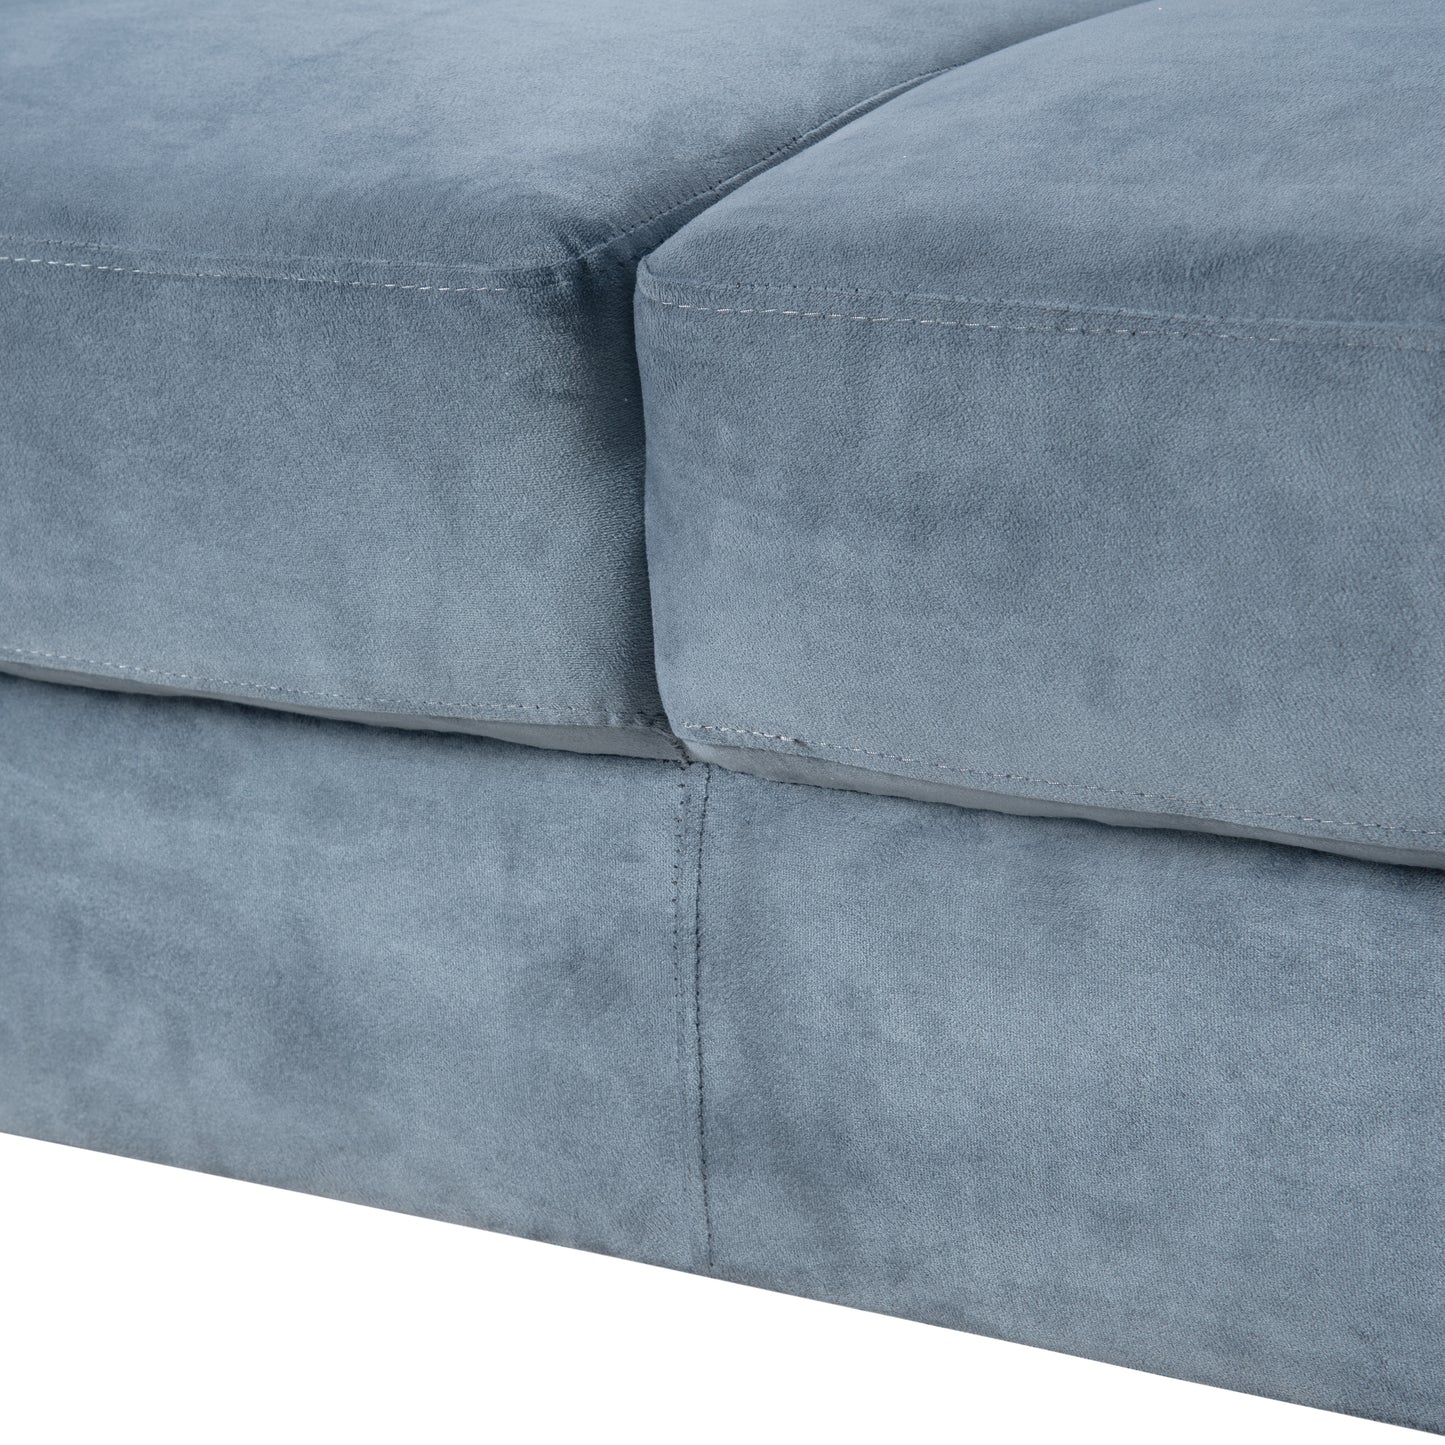 Couch Comfortable Velvet Upholstered Armchair Sofa